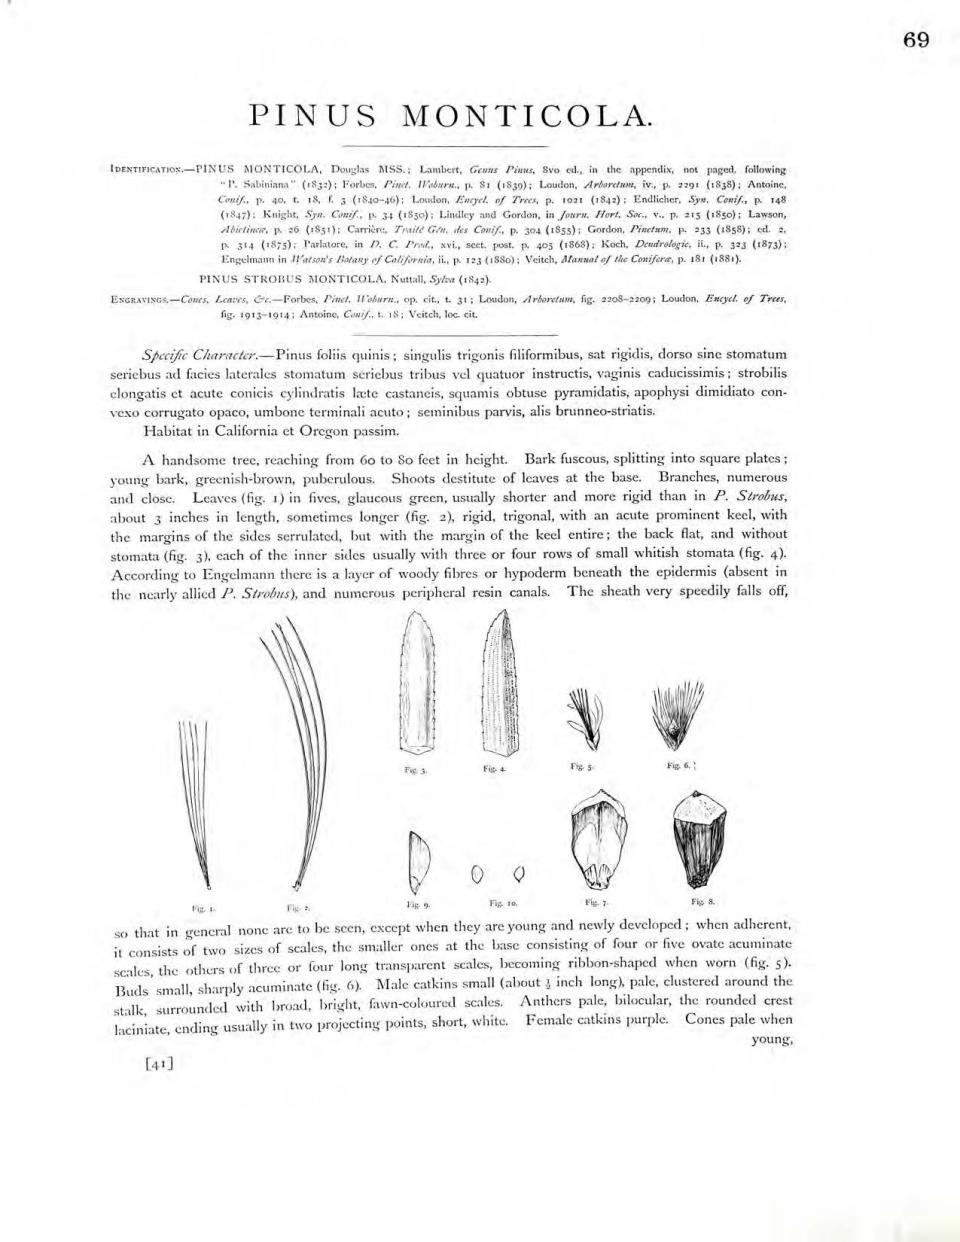 Page from Pinetum Britannicum